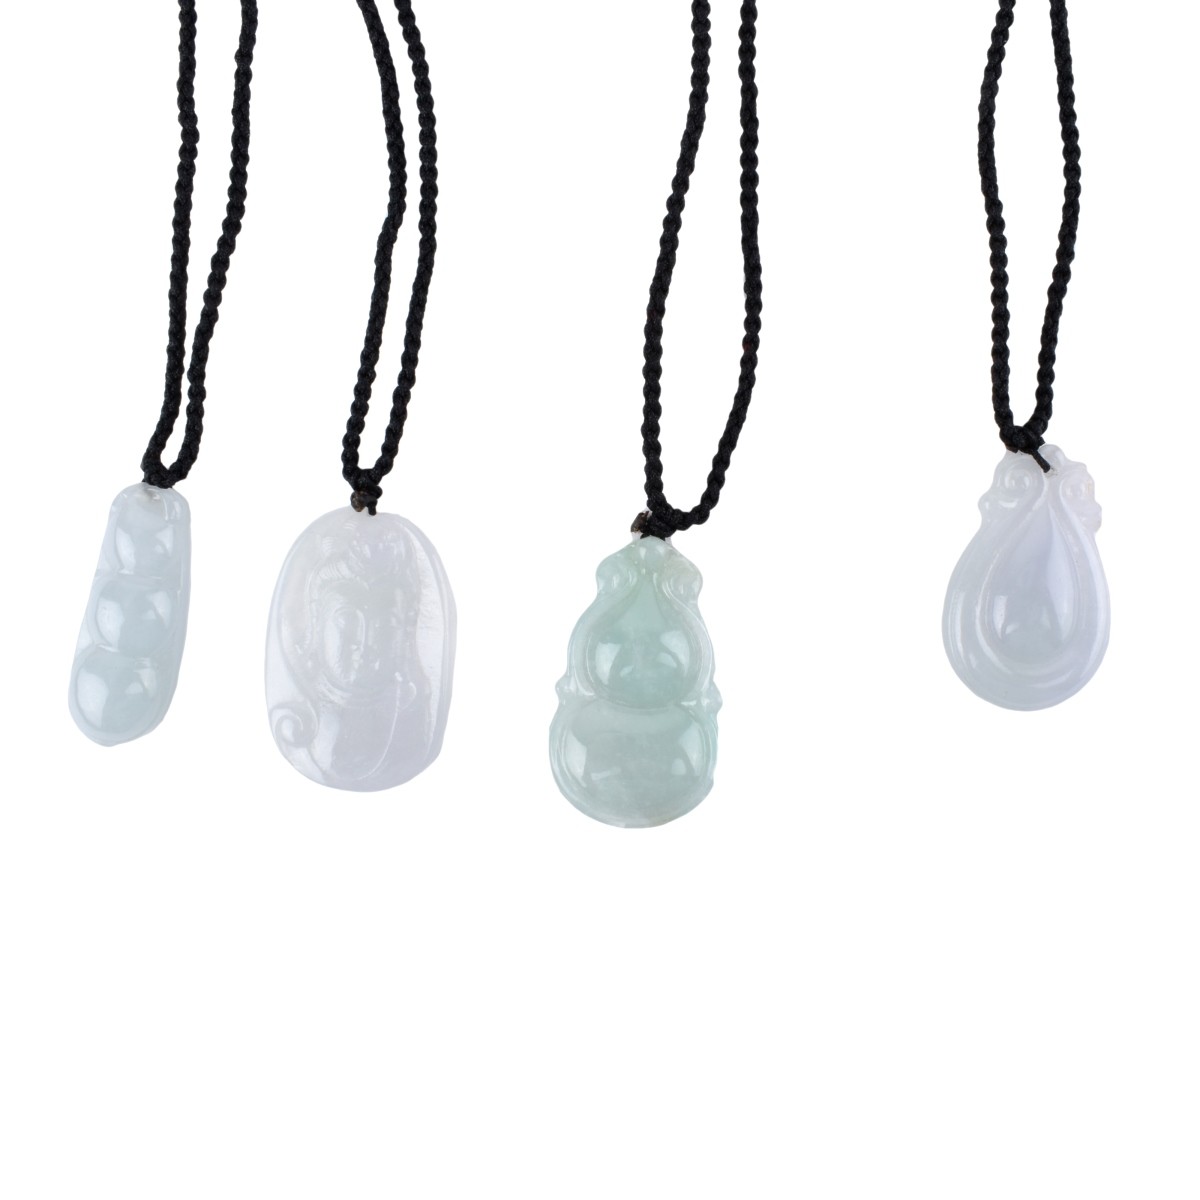 Four Jade Pendant Necklaces